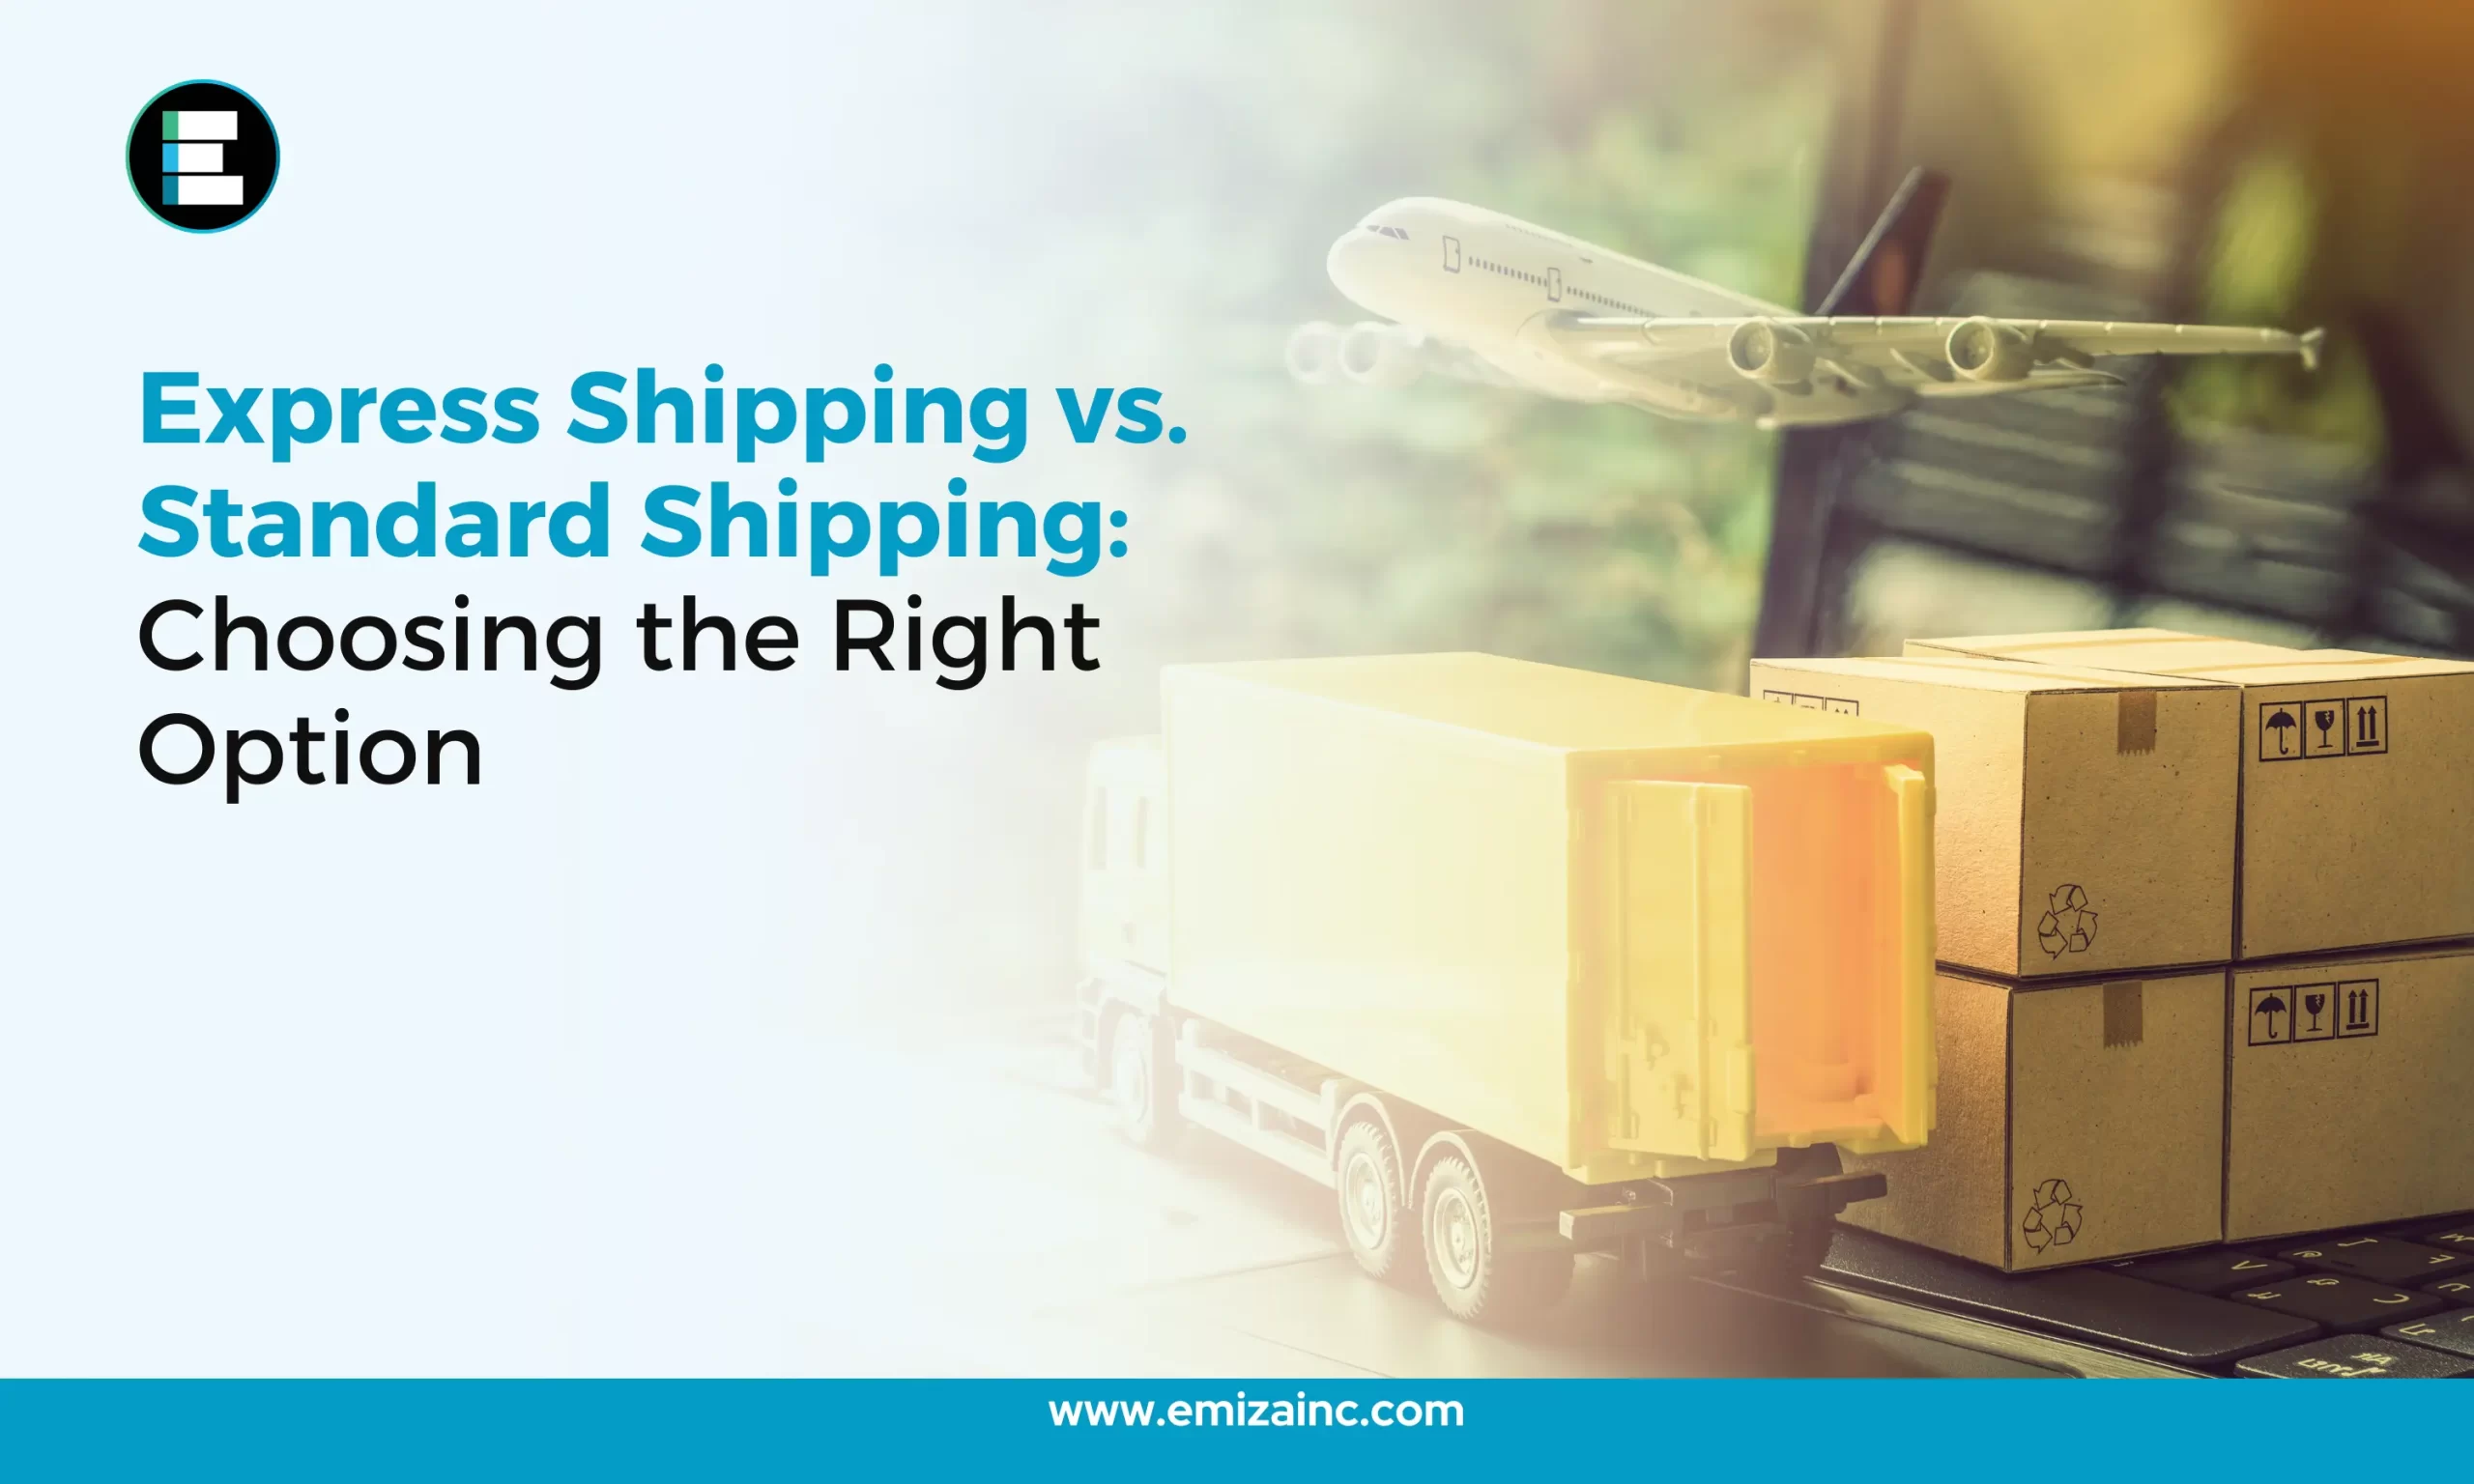 Express Shipping vs. Standard Shipping: Choosing the Right Option